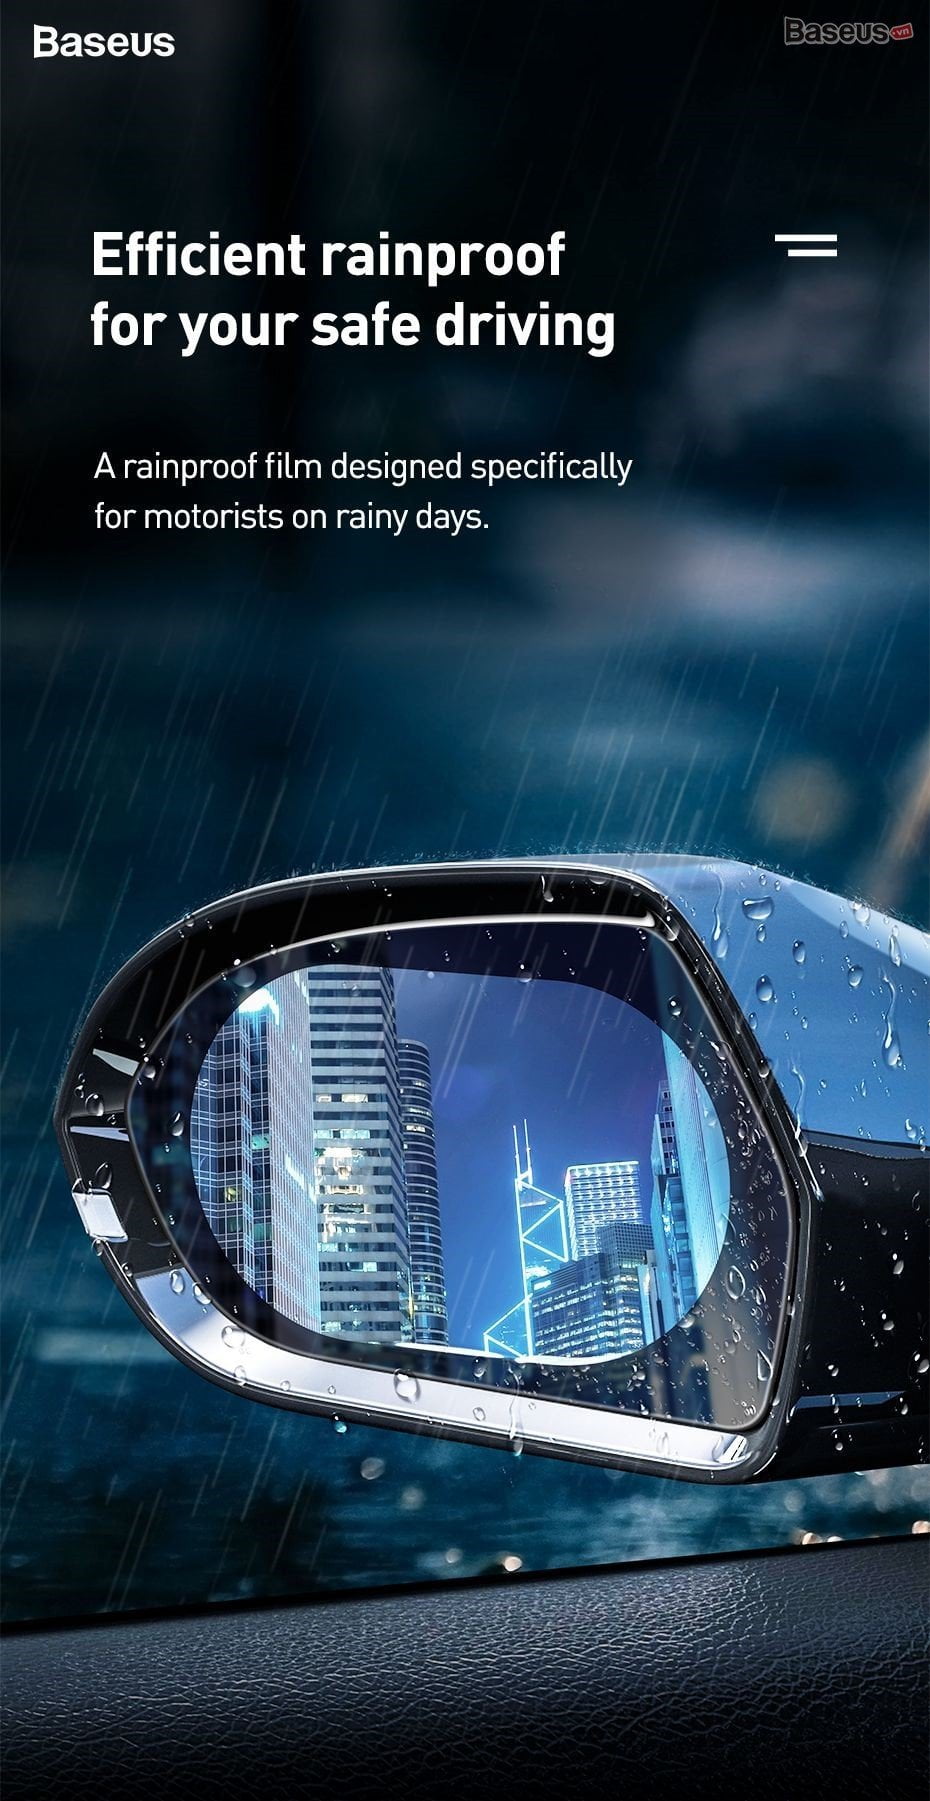 0 15mm rainproof film for car rear view mirror 02 61af19dbd5b8437ebfc4c8be04f3dc9f